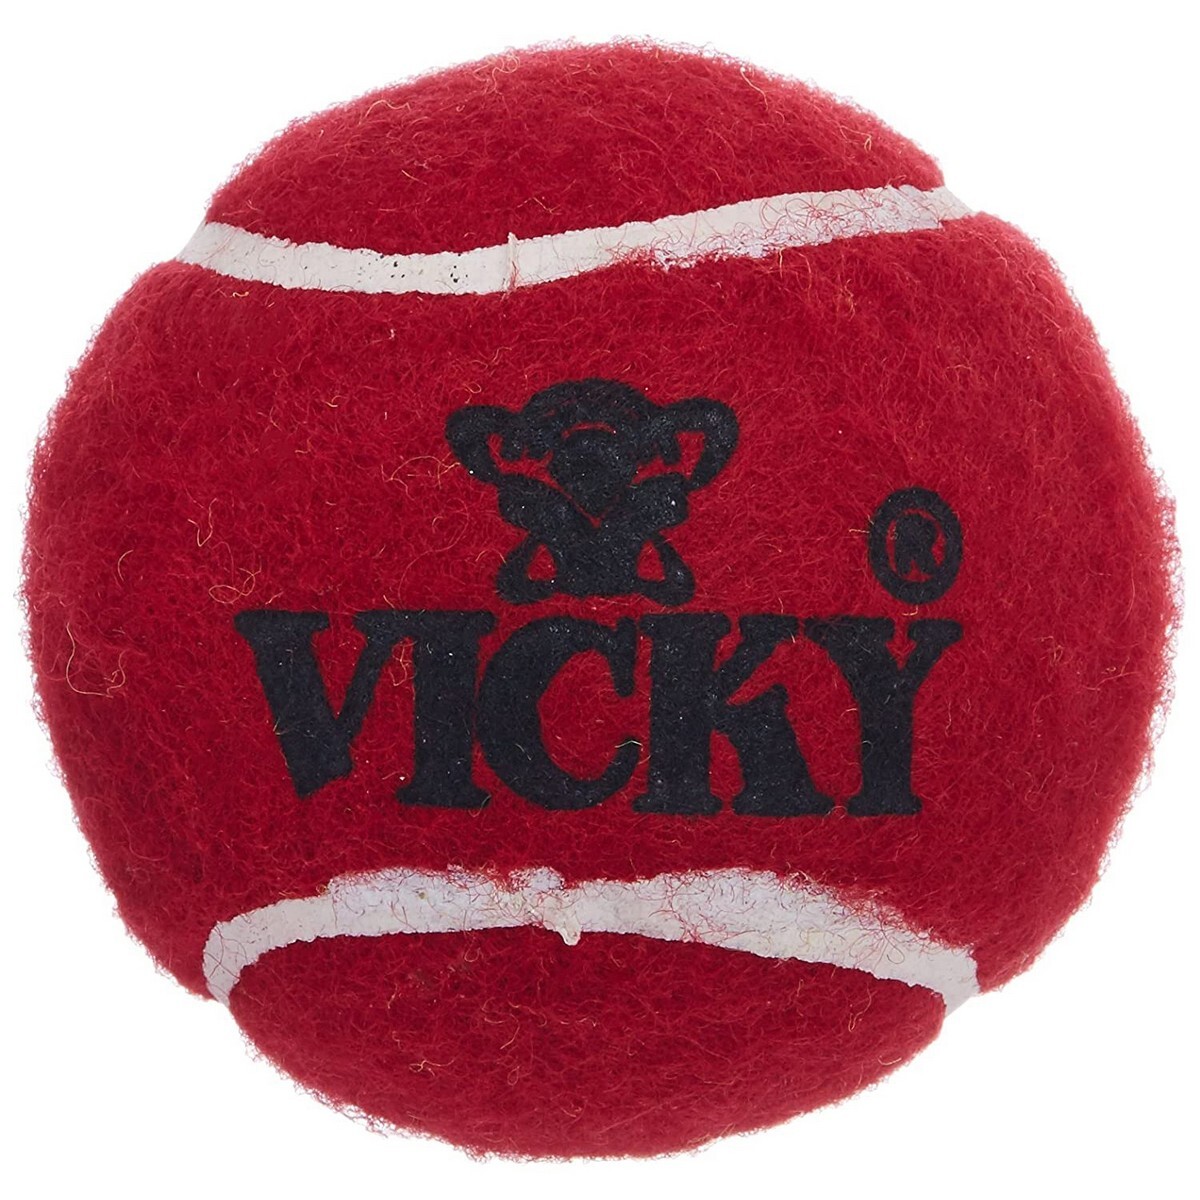 Modern Tennis Ball Vicky Heavy